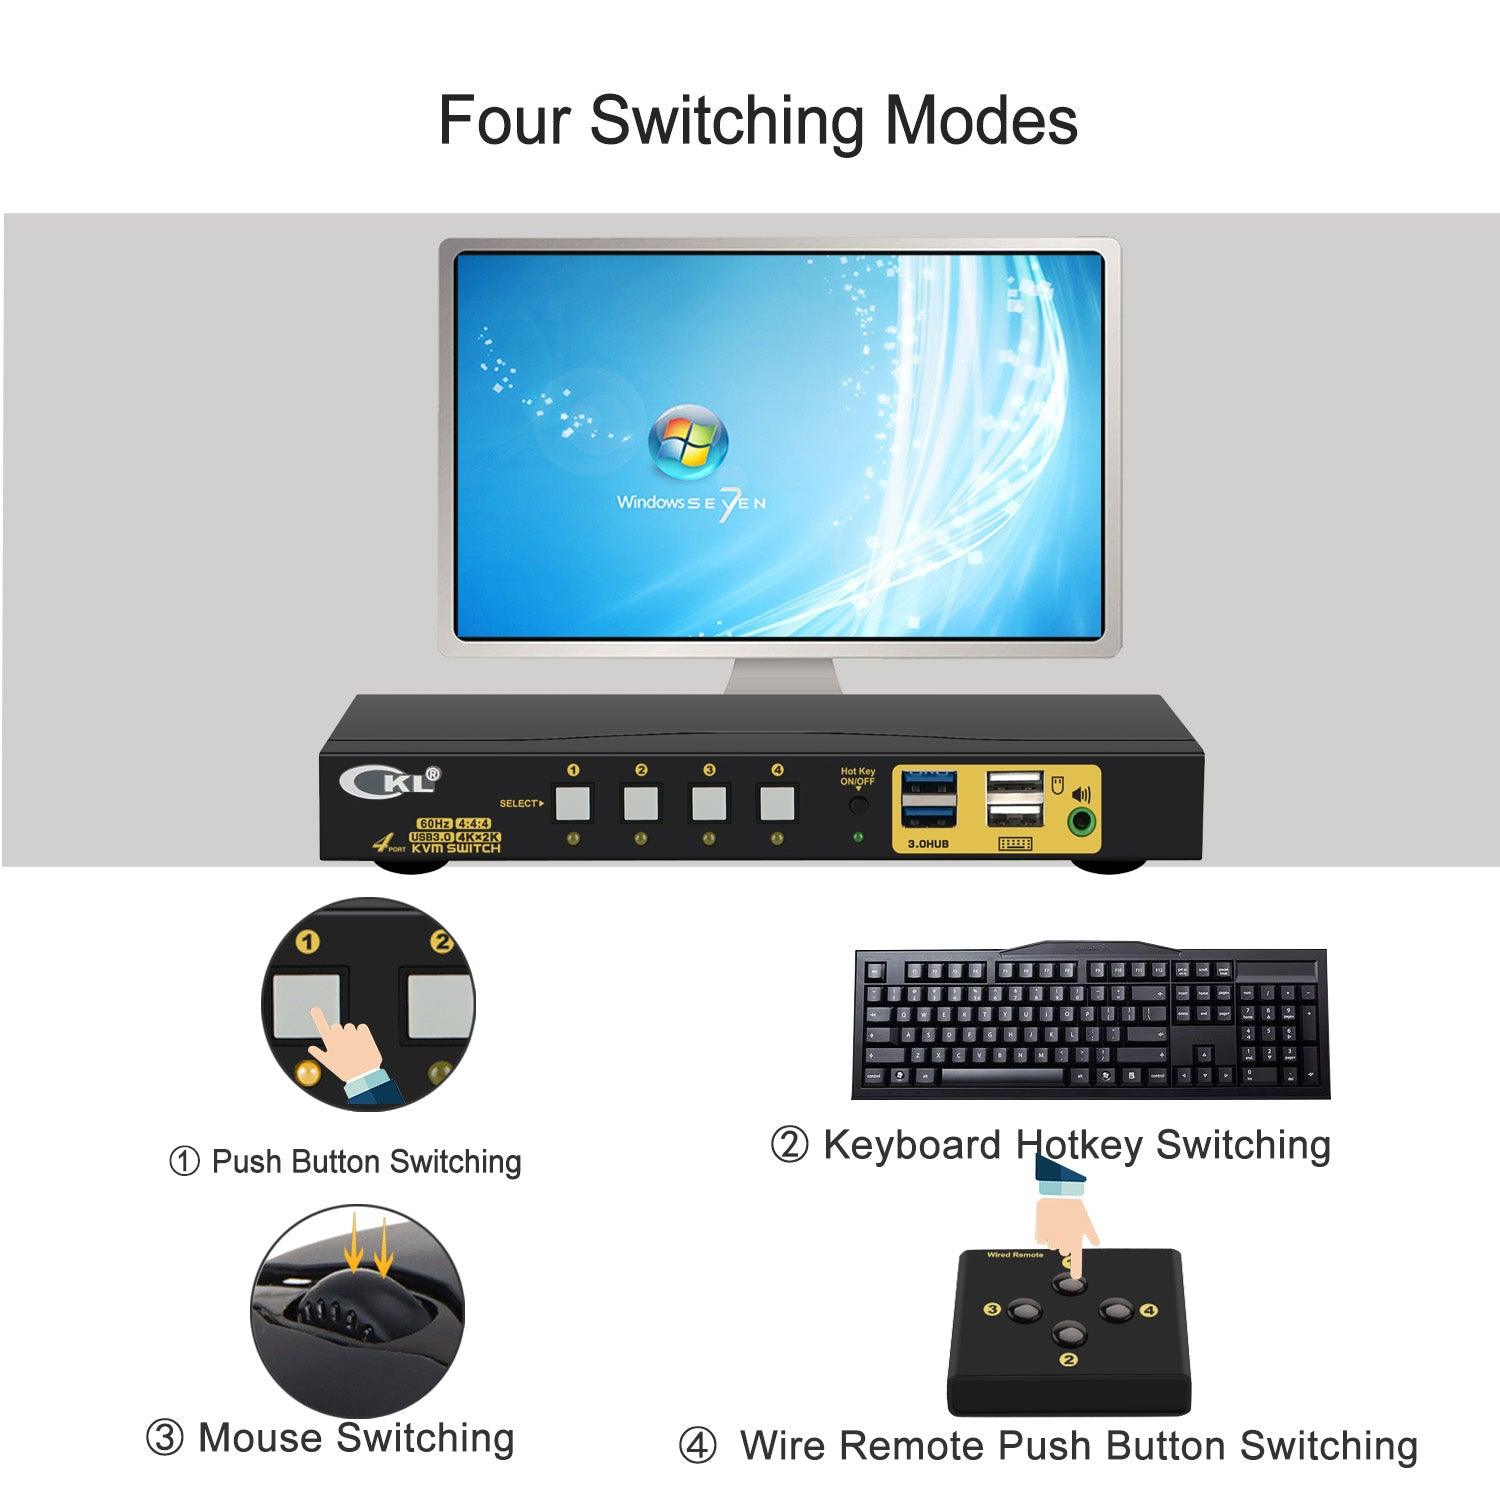 4x1 USB 3.0 KVM Switch Single Monitor HDMI 2.0 4K 60Hz CKL-64HUA-3 - CKL KVM Switches